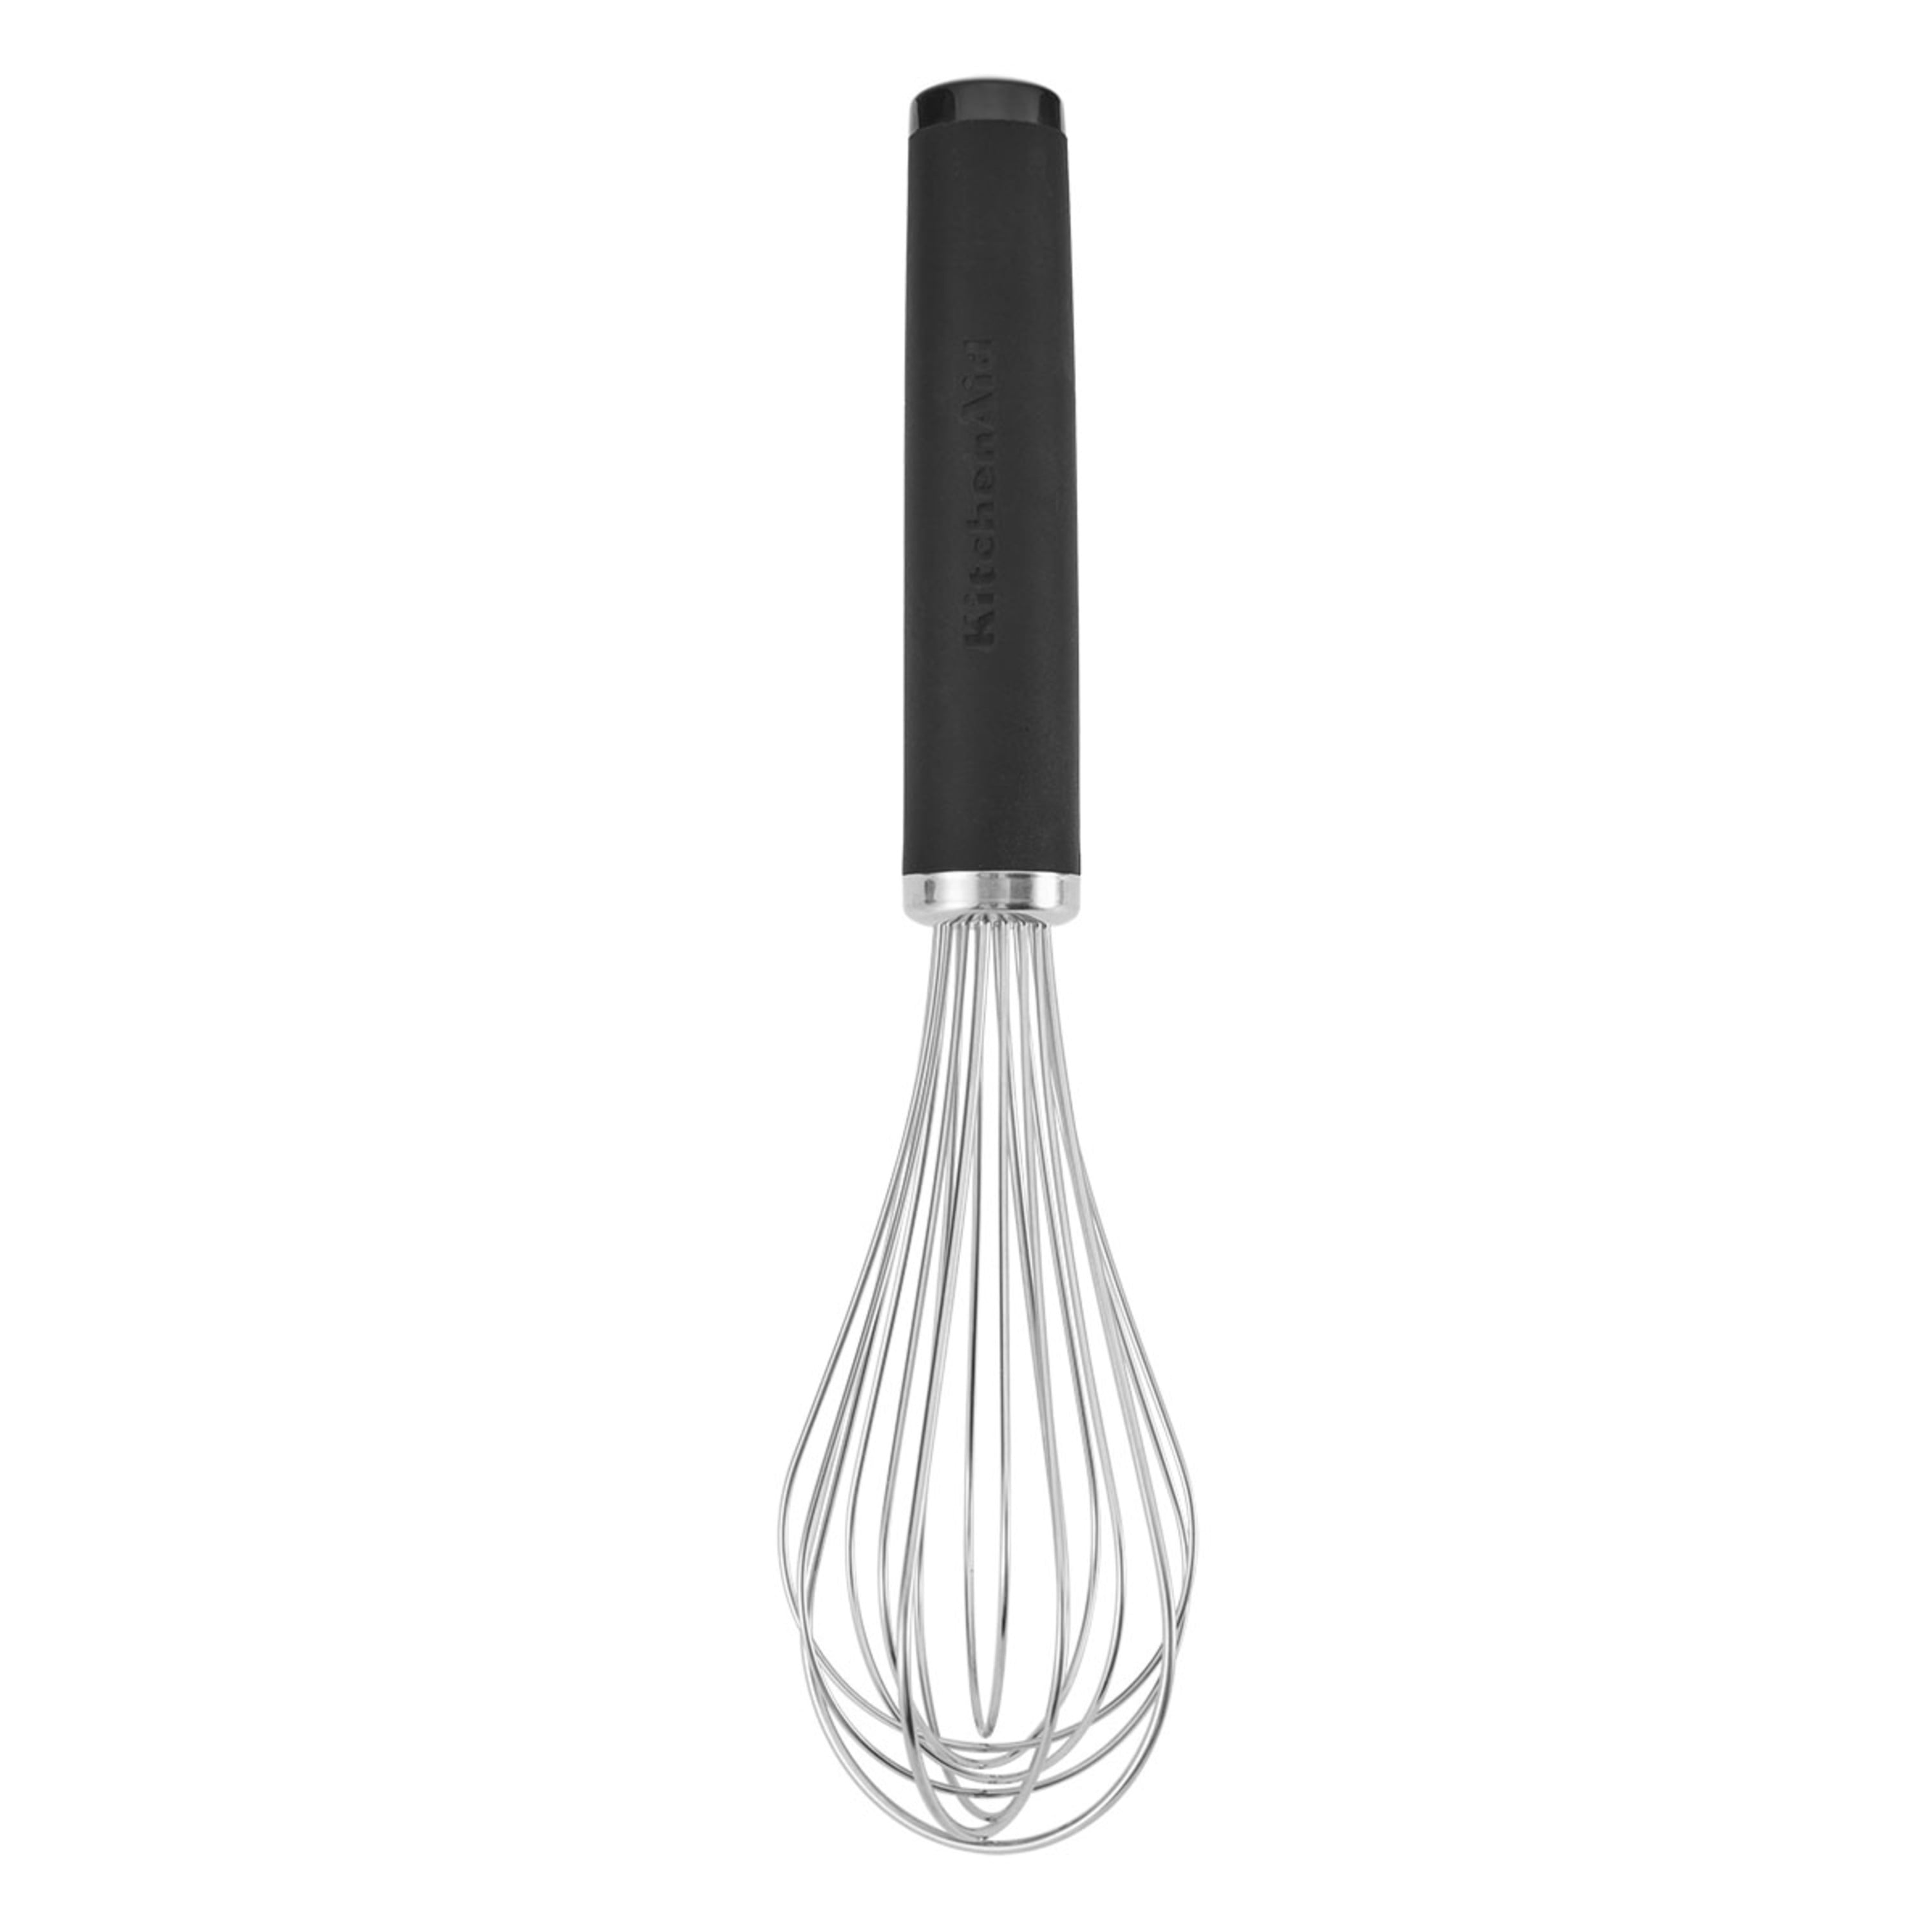 Kitchenaid Stainless Steel Utility Whisk with Black Handle, Dishwasher Safe